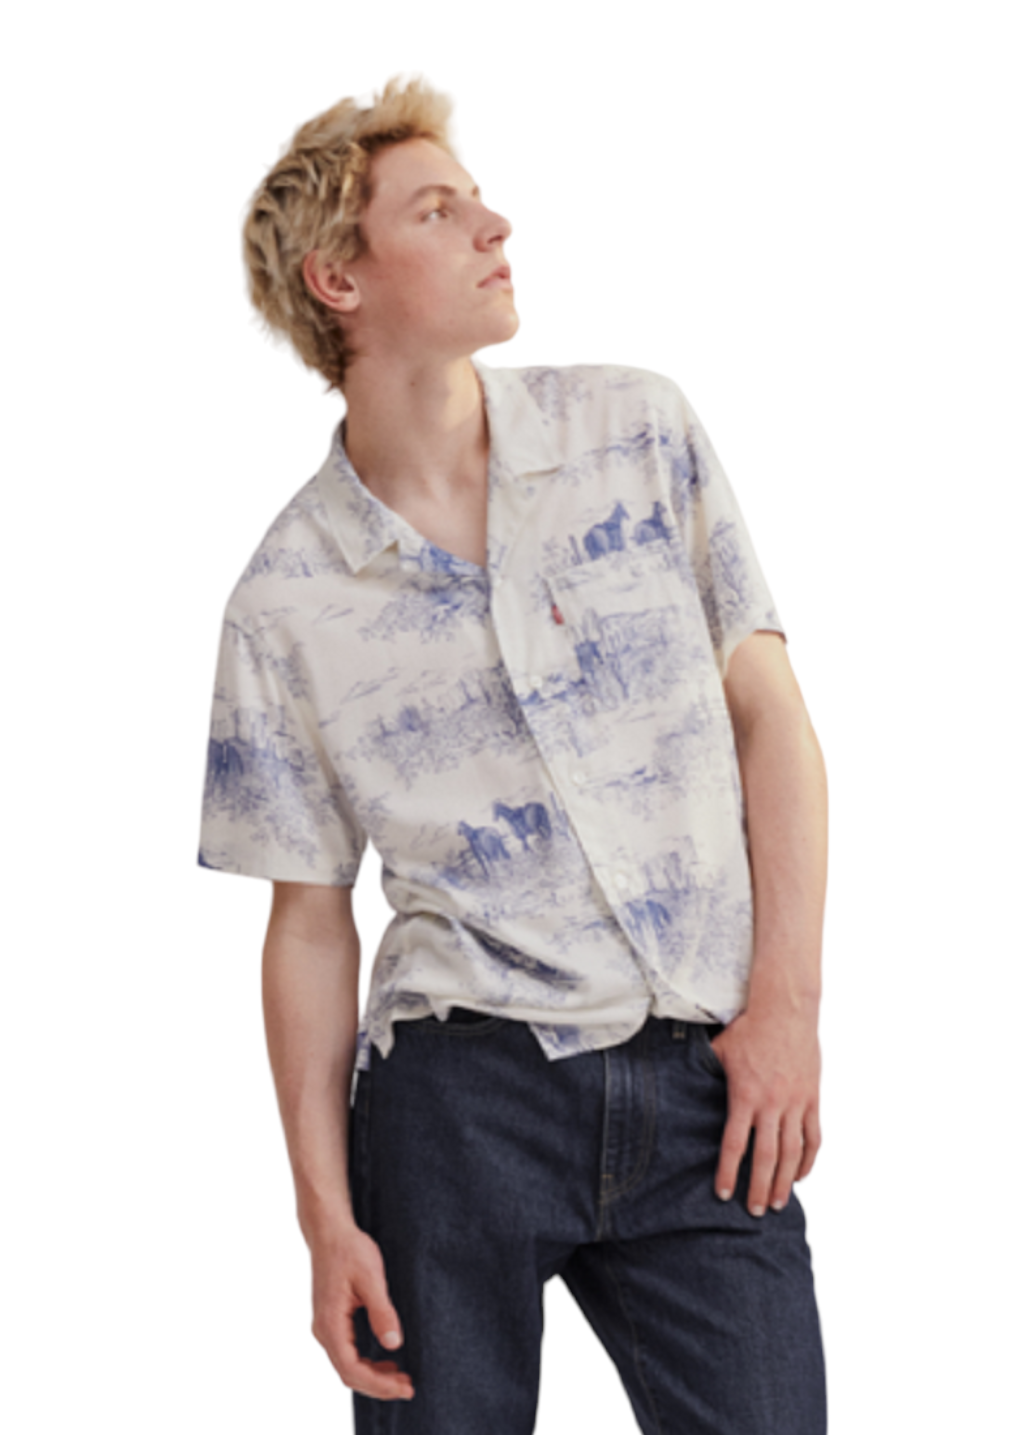 LEVI'S VINTAGE CLOTHING SPORTSWEAR SHIRT - TONAL BLUES PATTERN